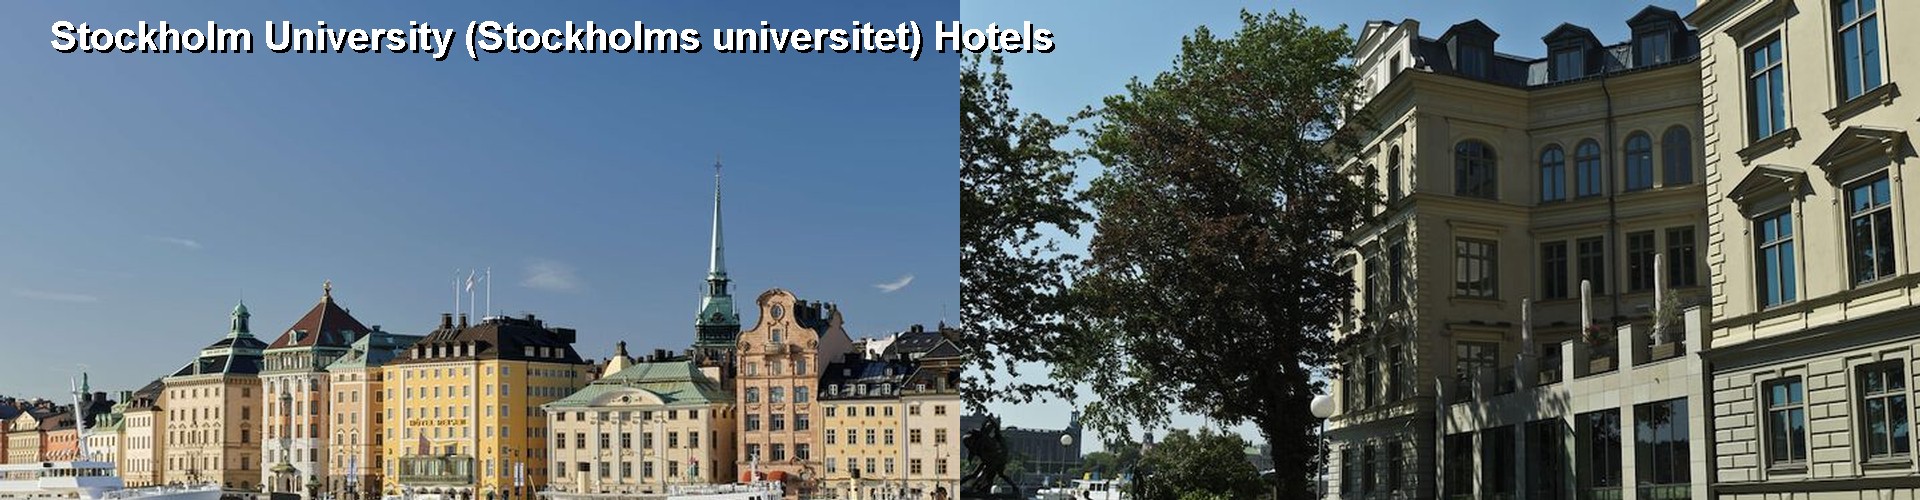 5 Best Hotels near Stockholm University (Stockholms universitet)